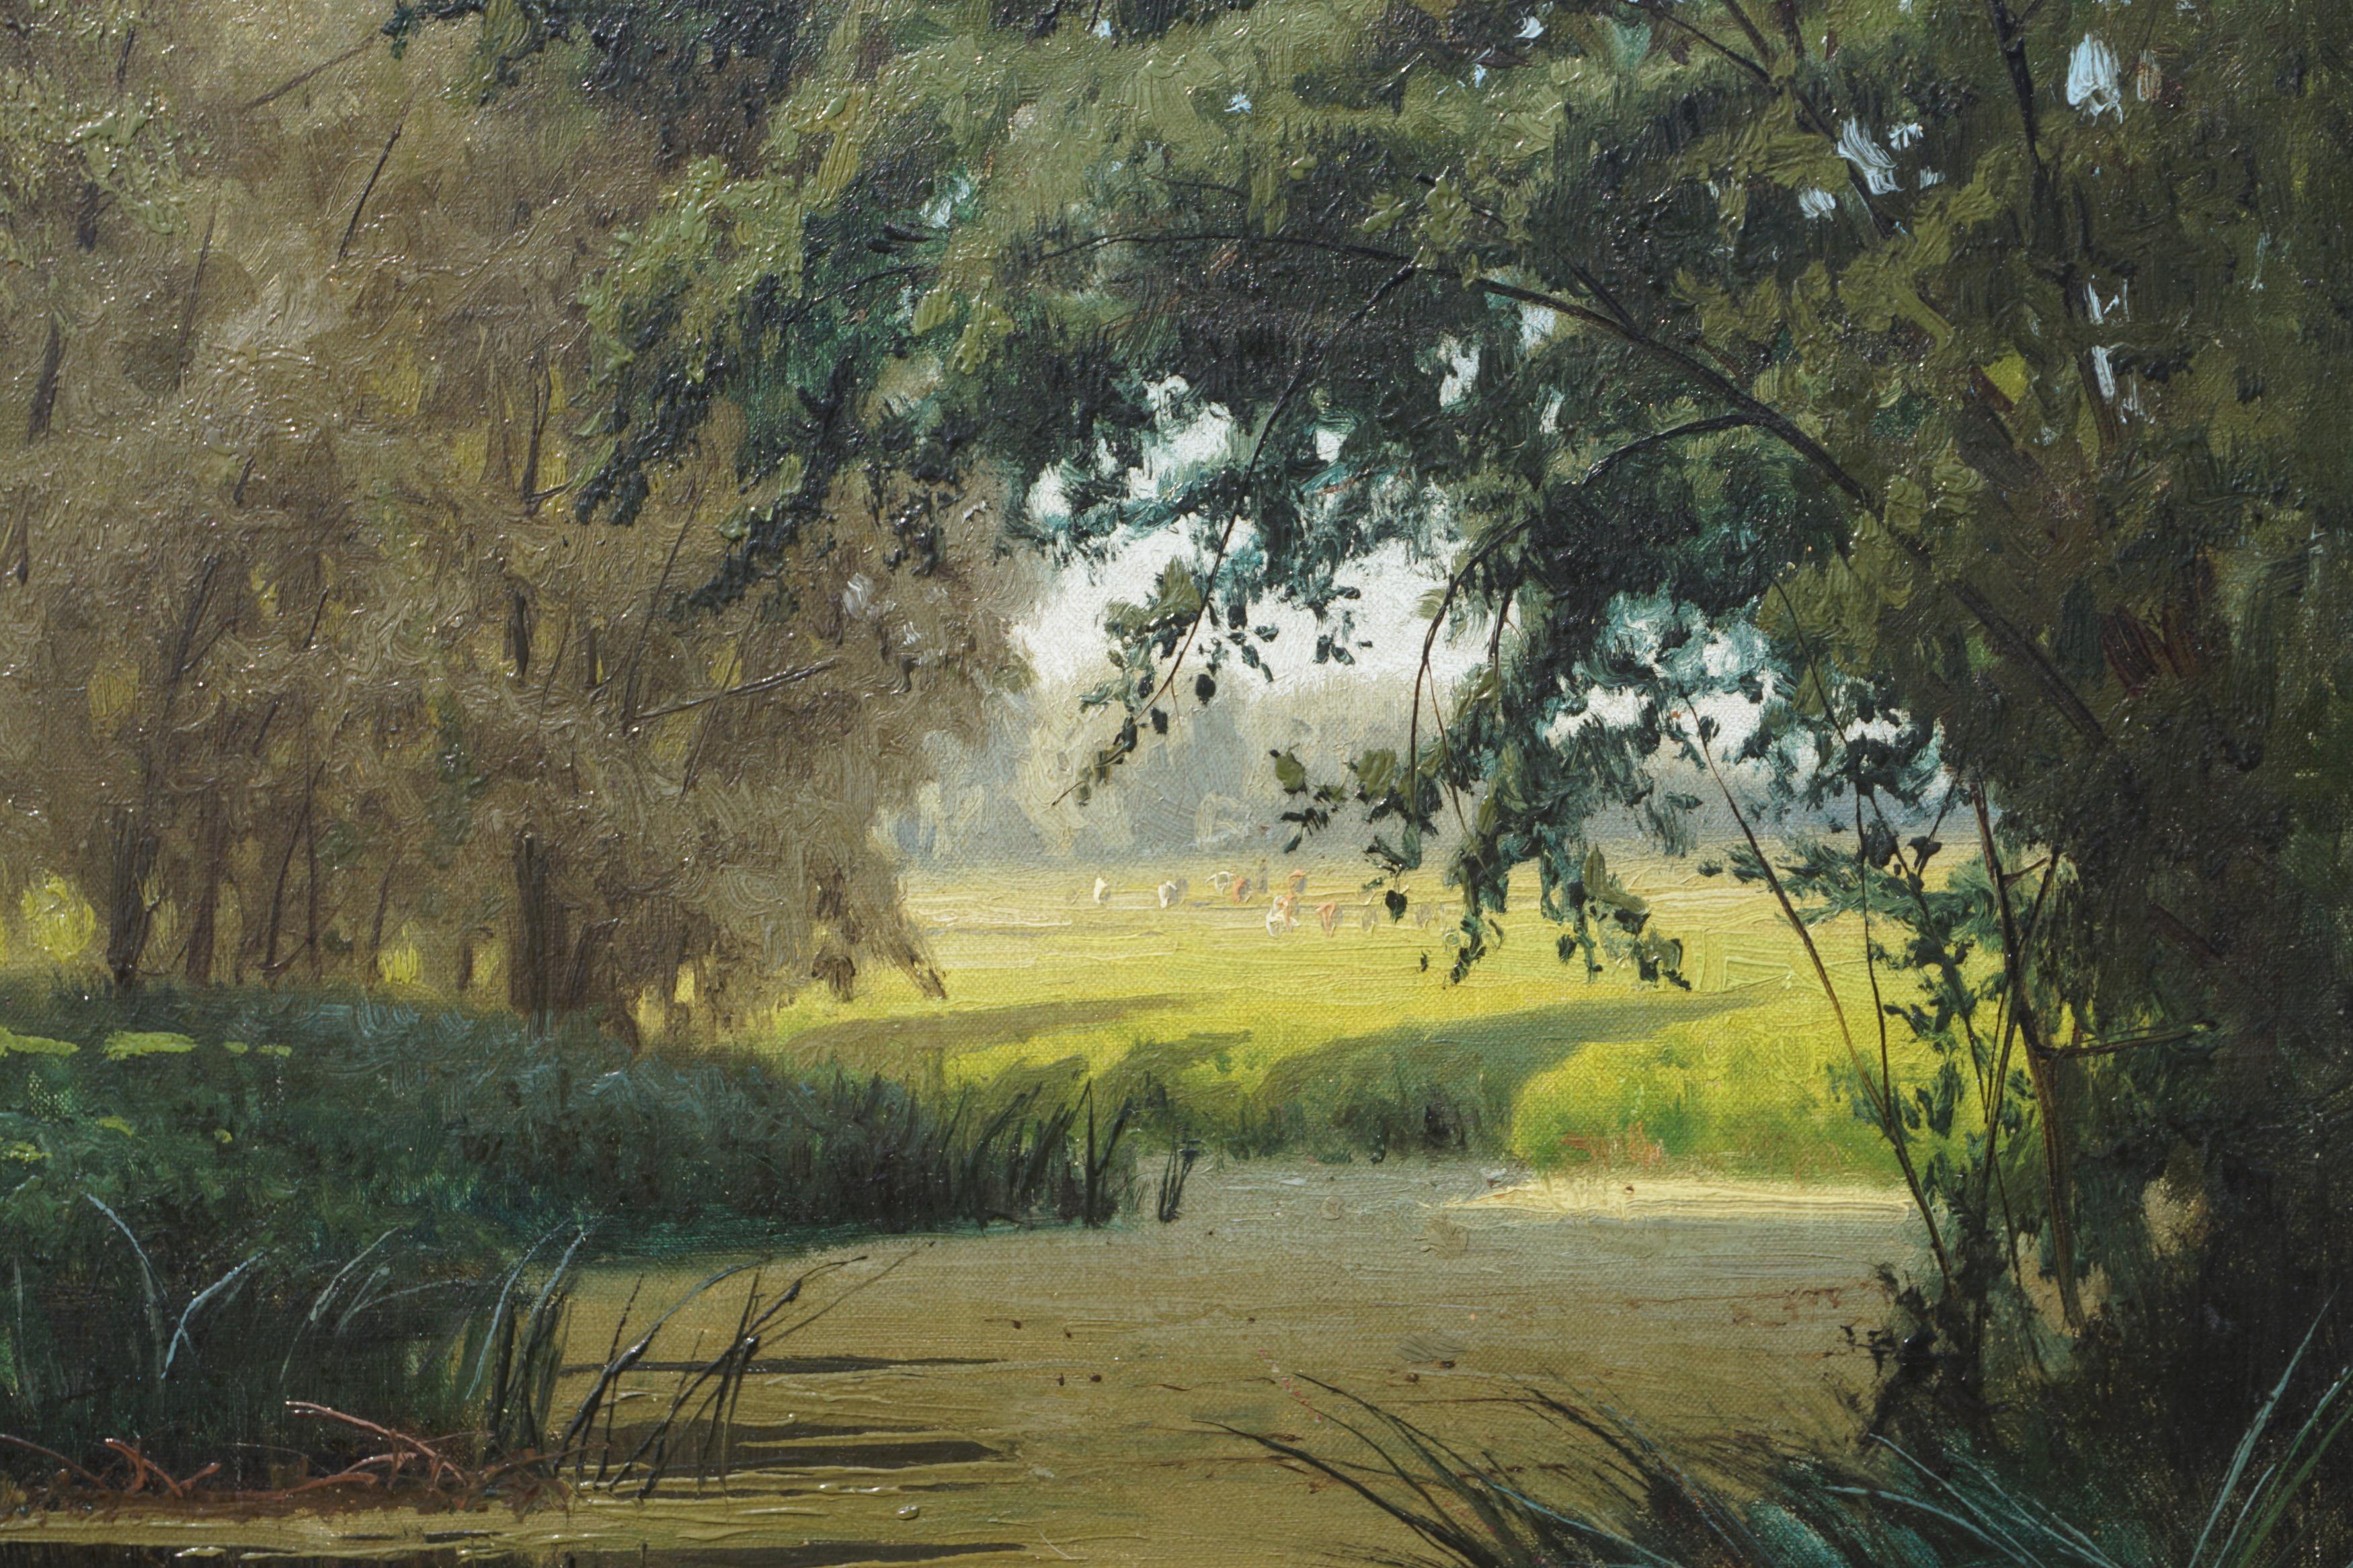 Shady Stream - Late 19th Century Bucolic Landscape - Painting by Nikolai Aleksandrovich Sergeev (Sergeyev)